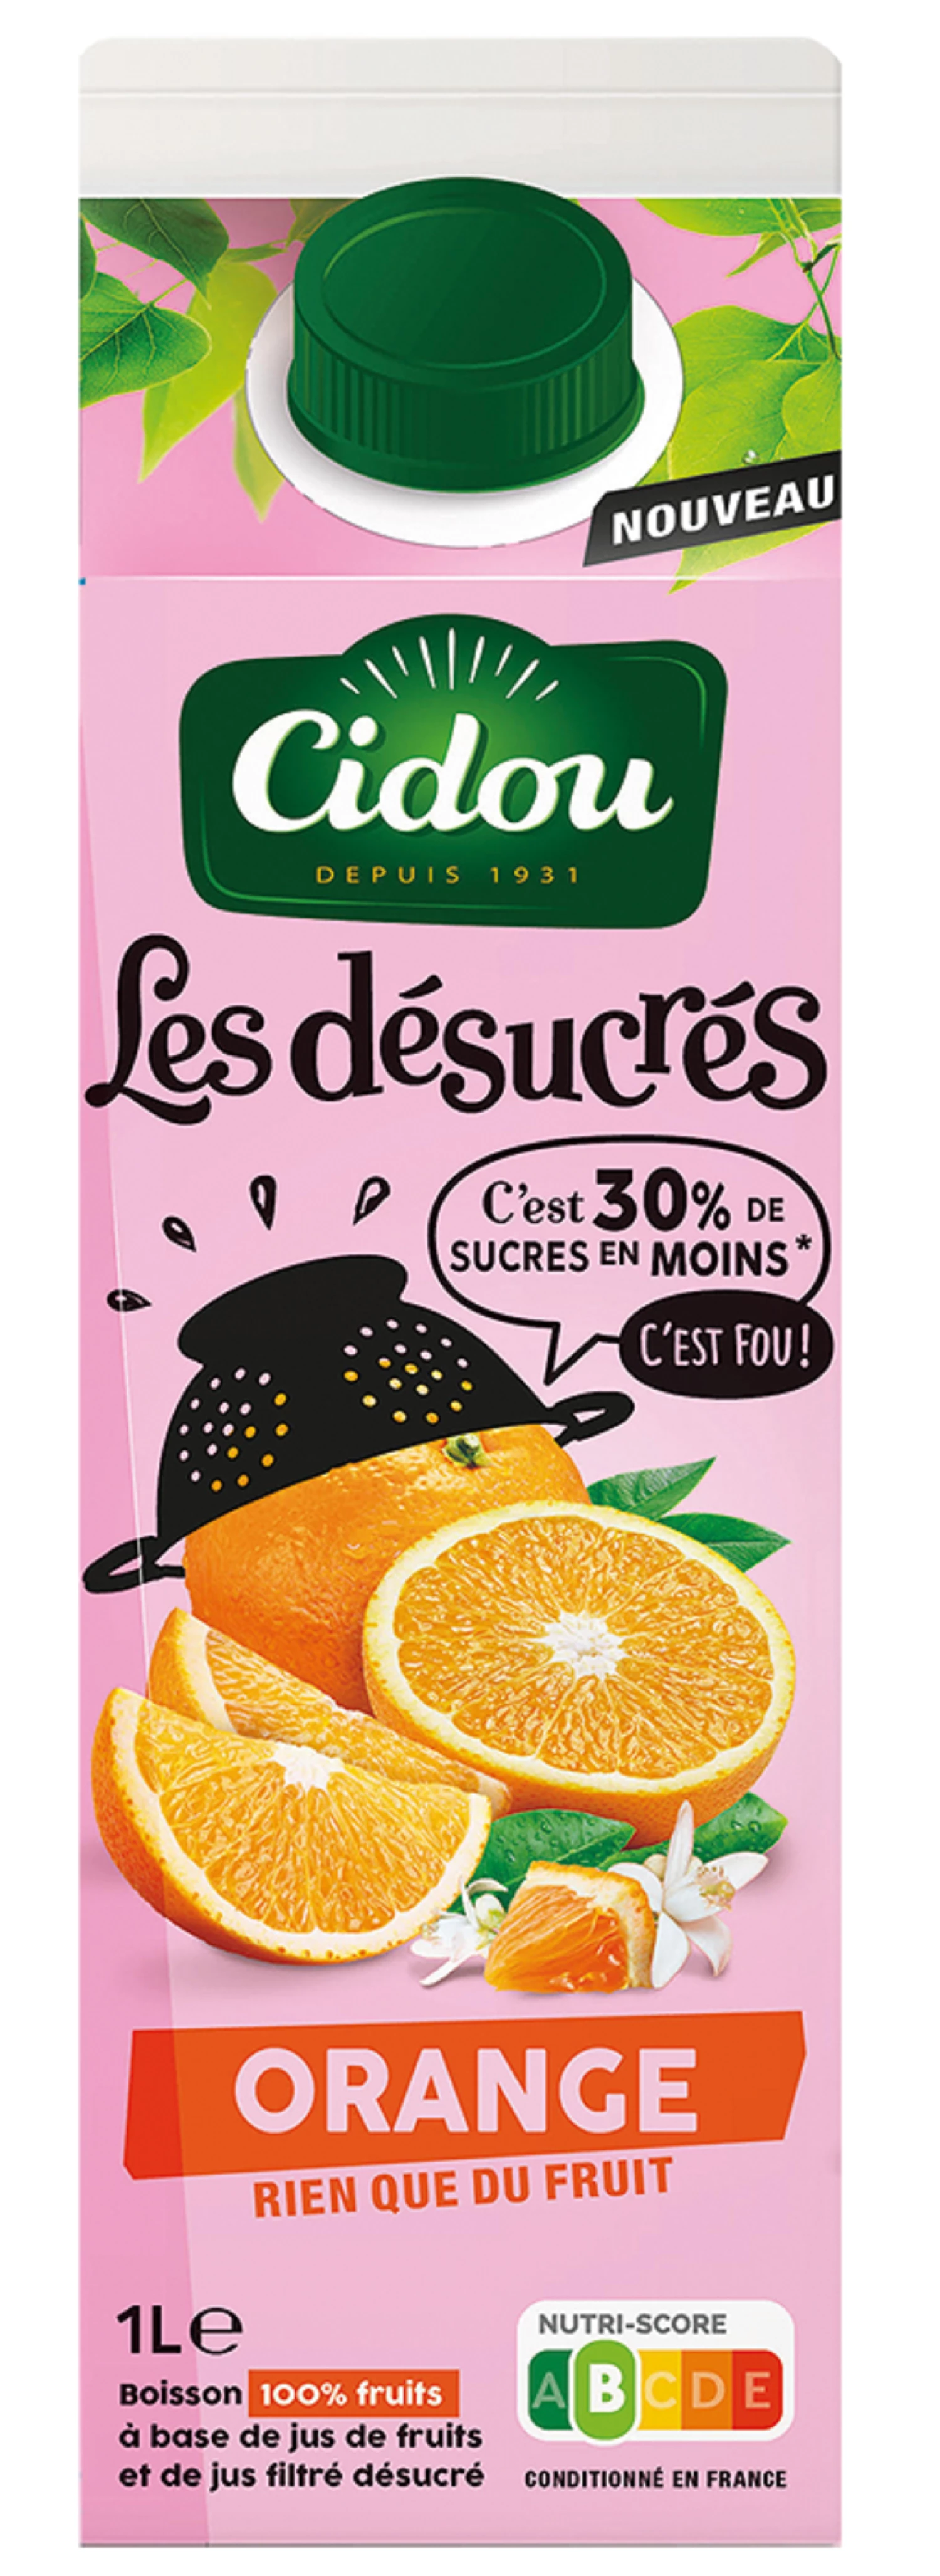 Cidou Les Desucres Orange 1l